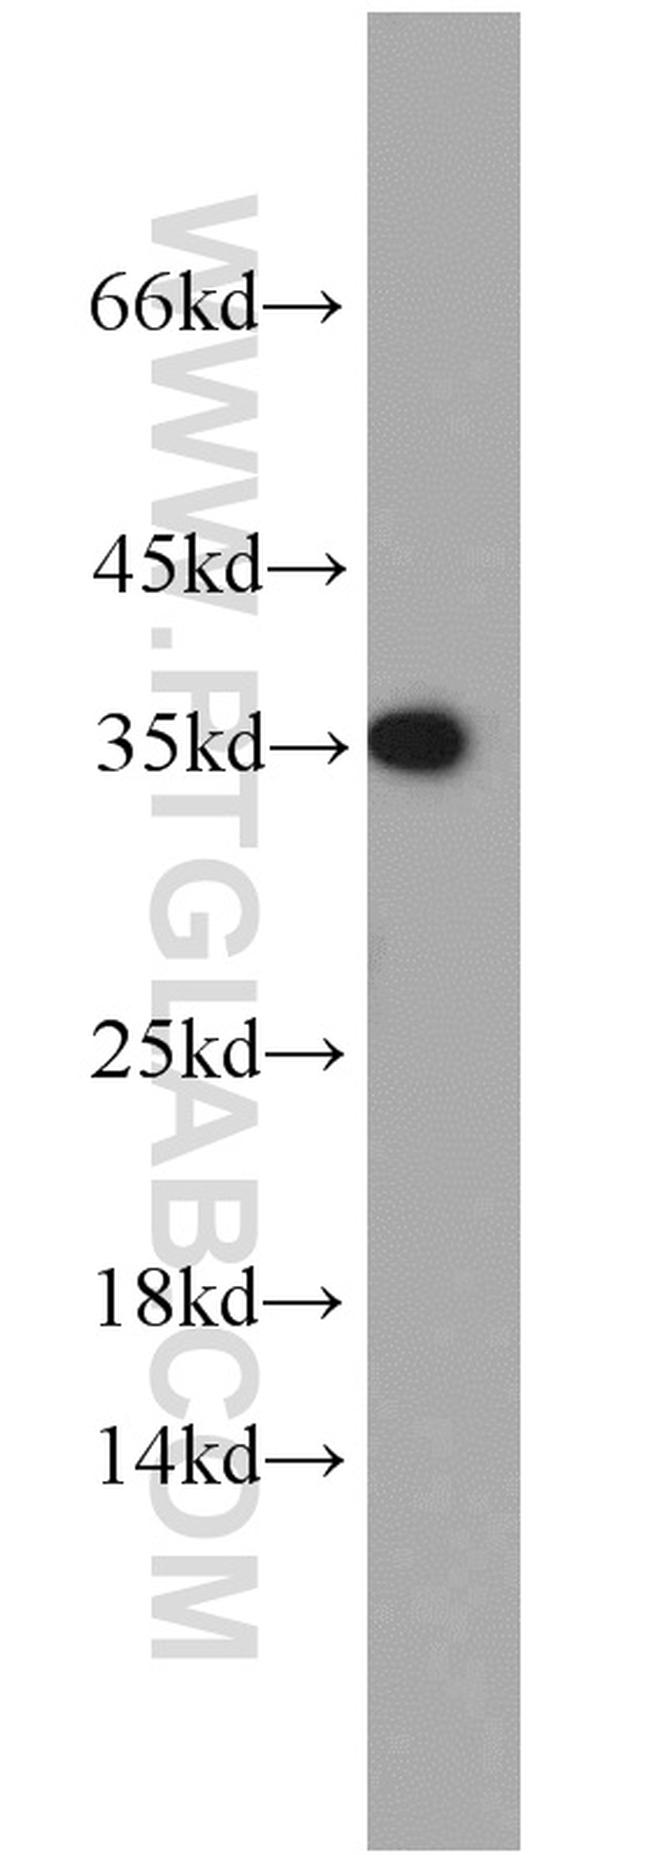 PKA C-beta Antibody in Western Blot (WB)